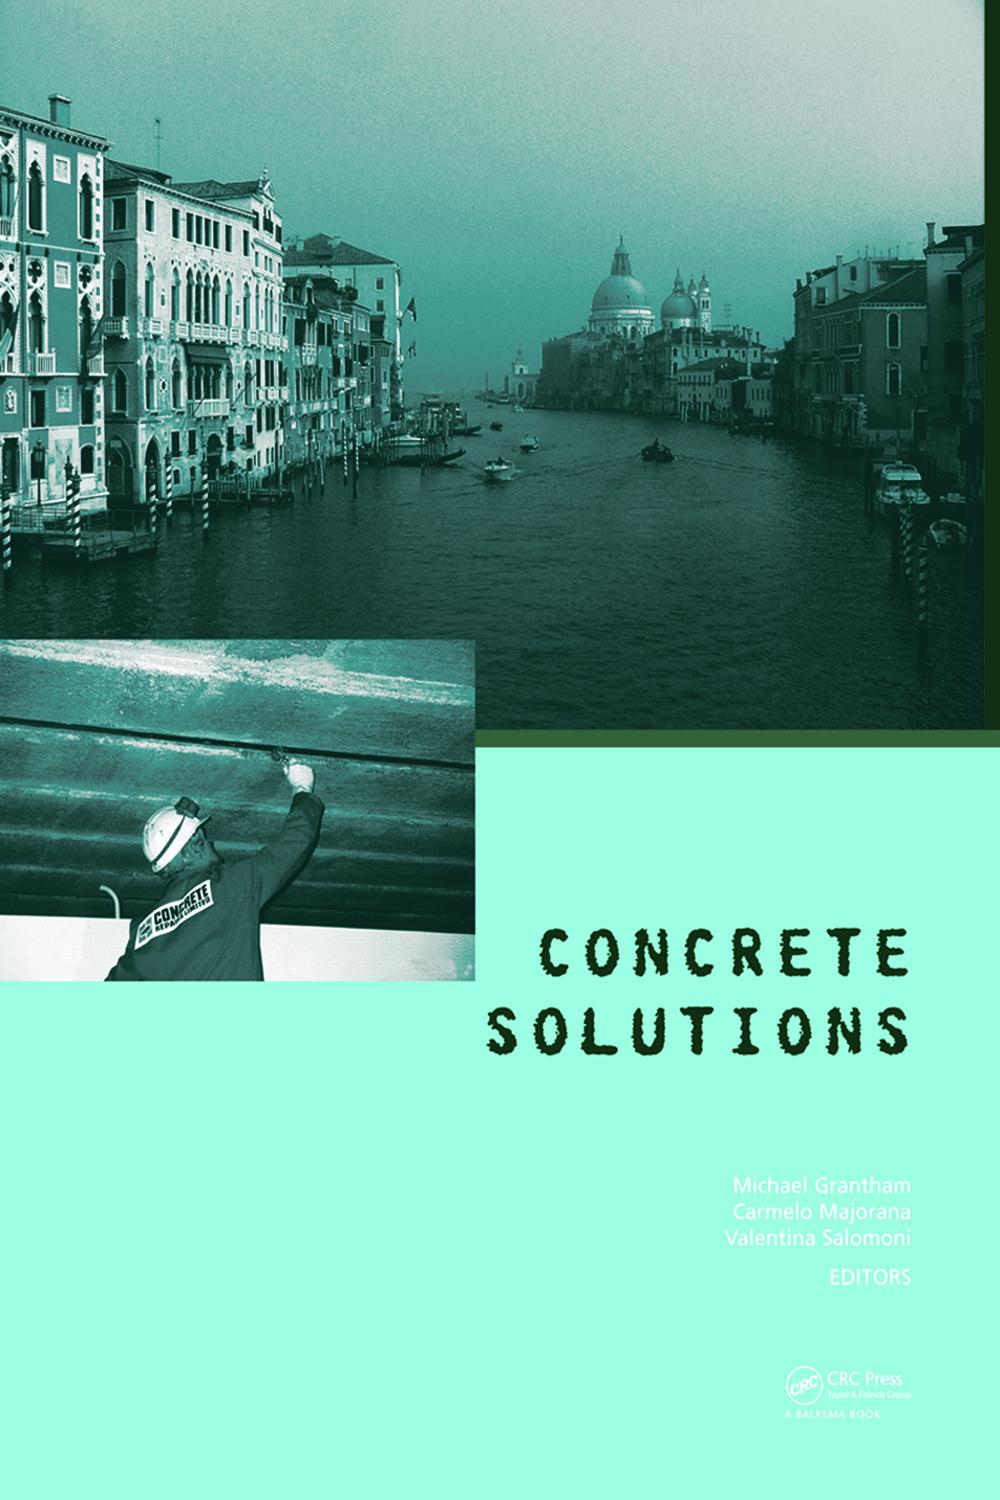 Concrete Solutions - Michael Grantham, Carmelo Majorana, Valentina Salomoni